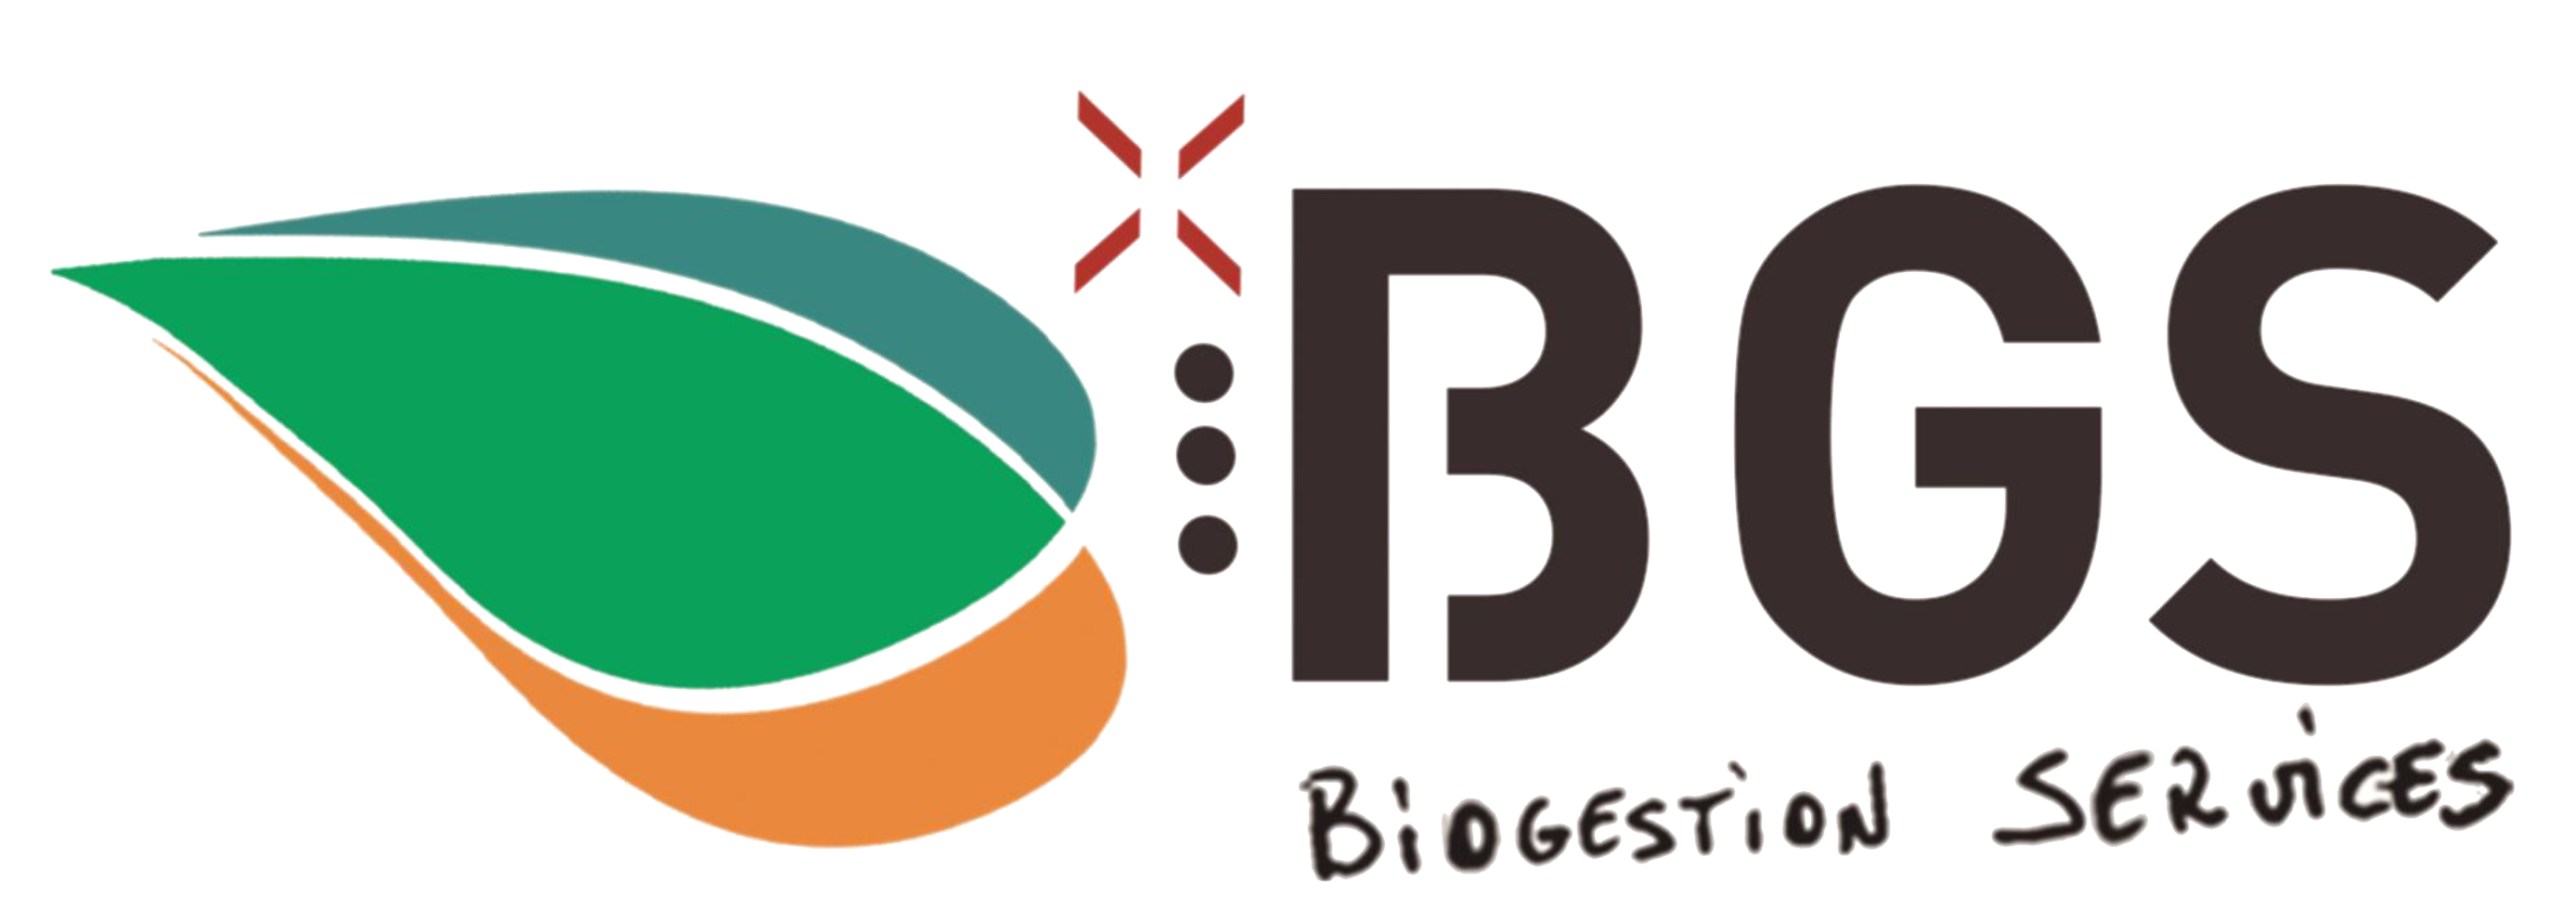 Biogestion Services